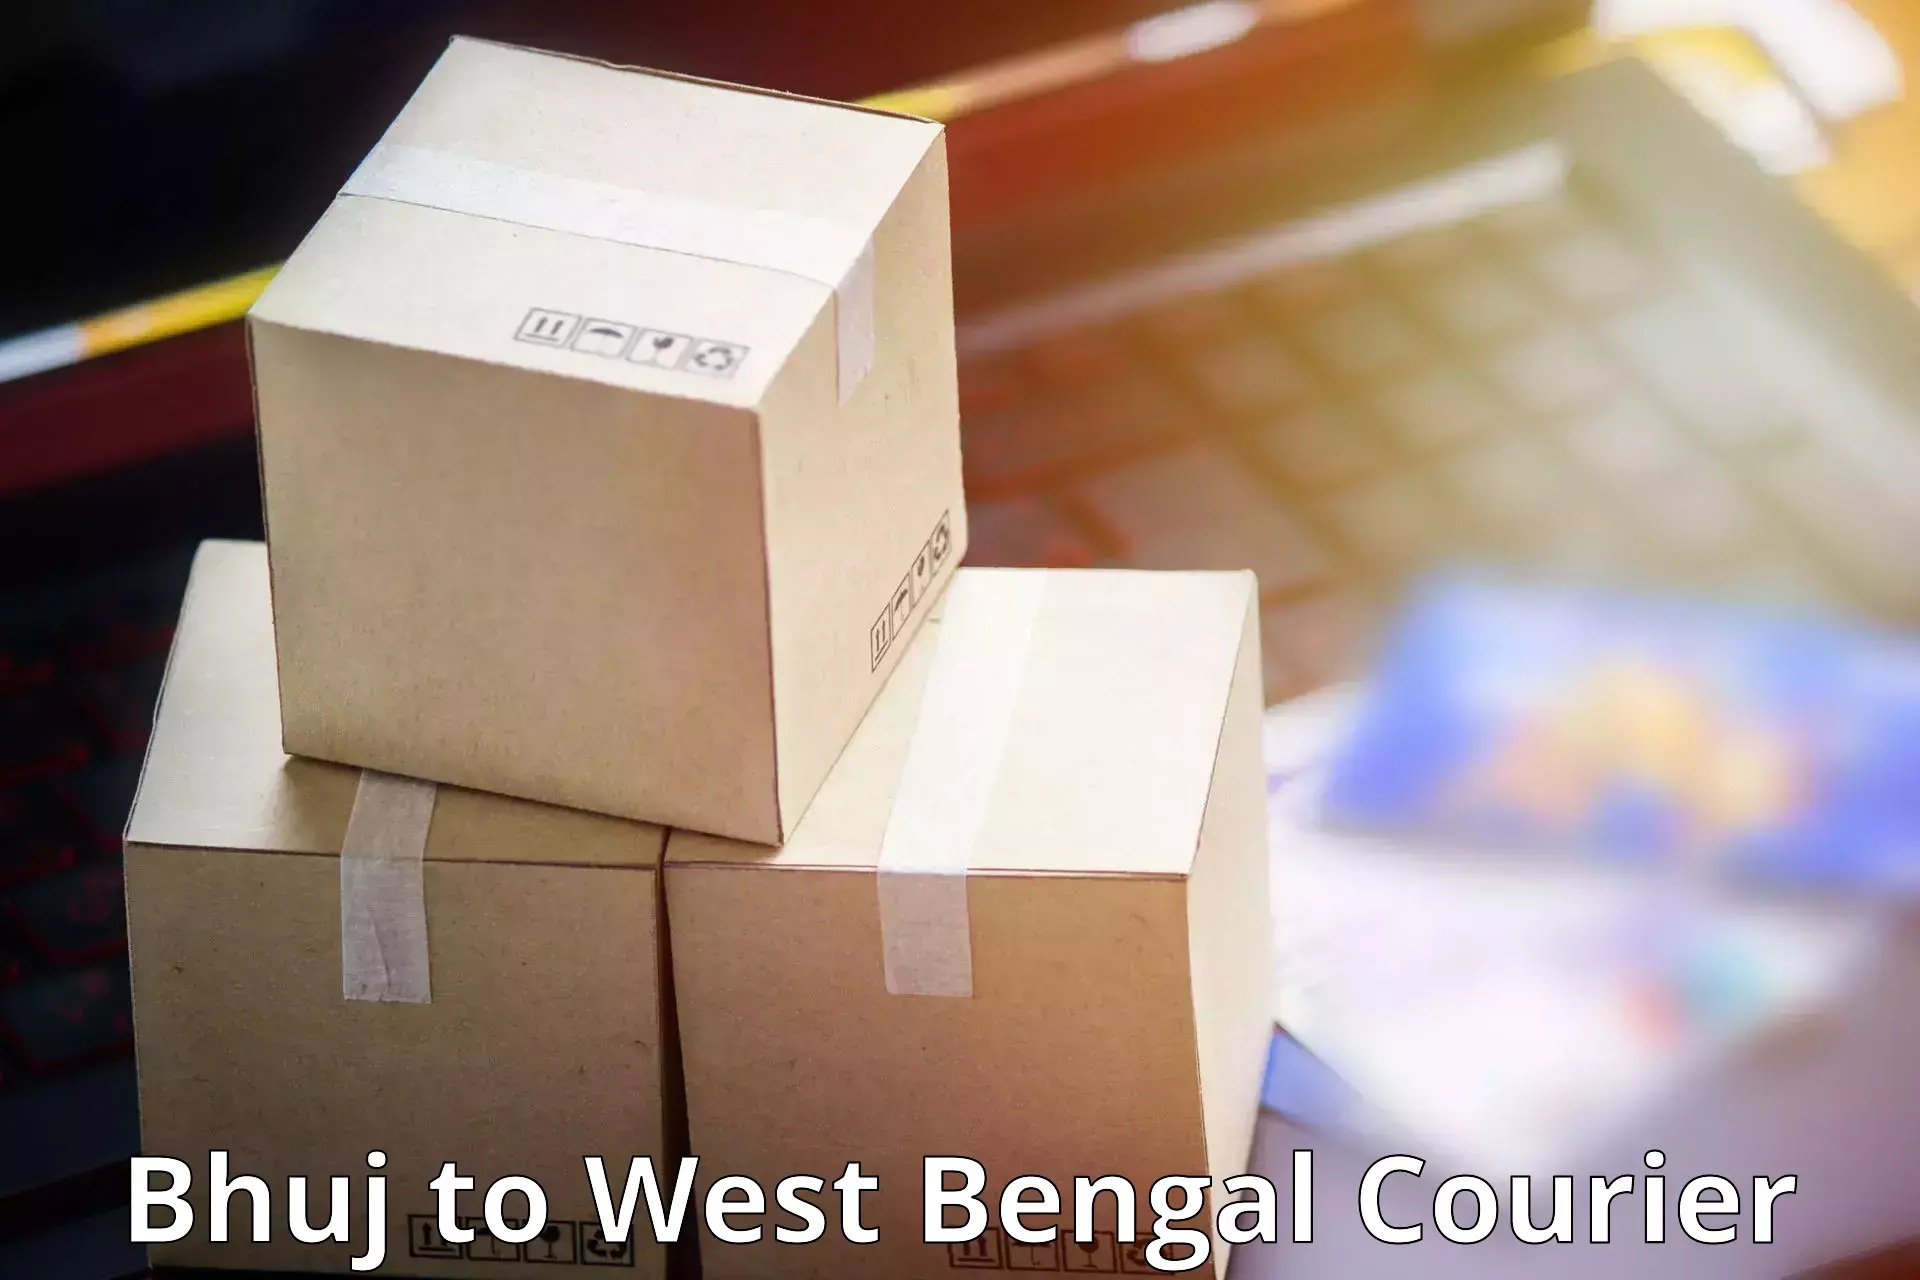 Courier service partnerships Bhuj to Burdwan